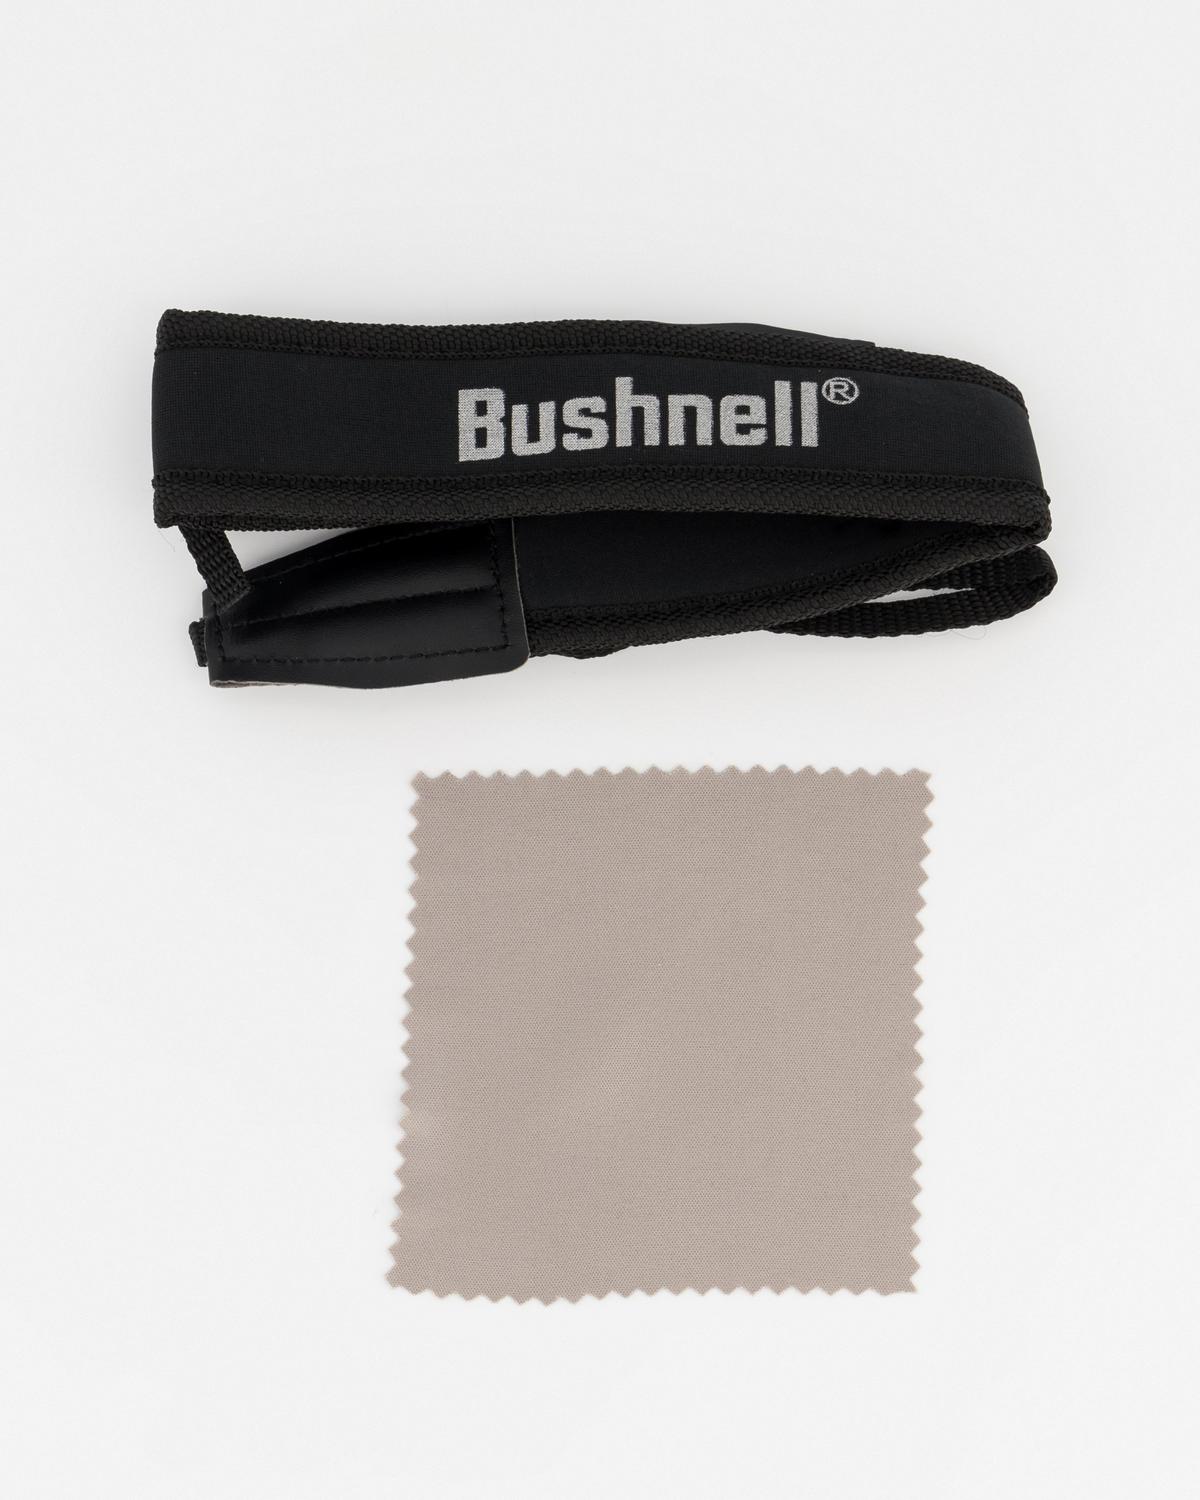 Bushnell Powerview 2 10x42 Binoculars -  Black